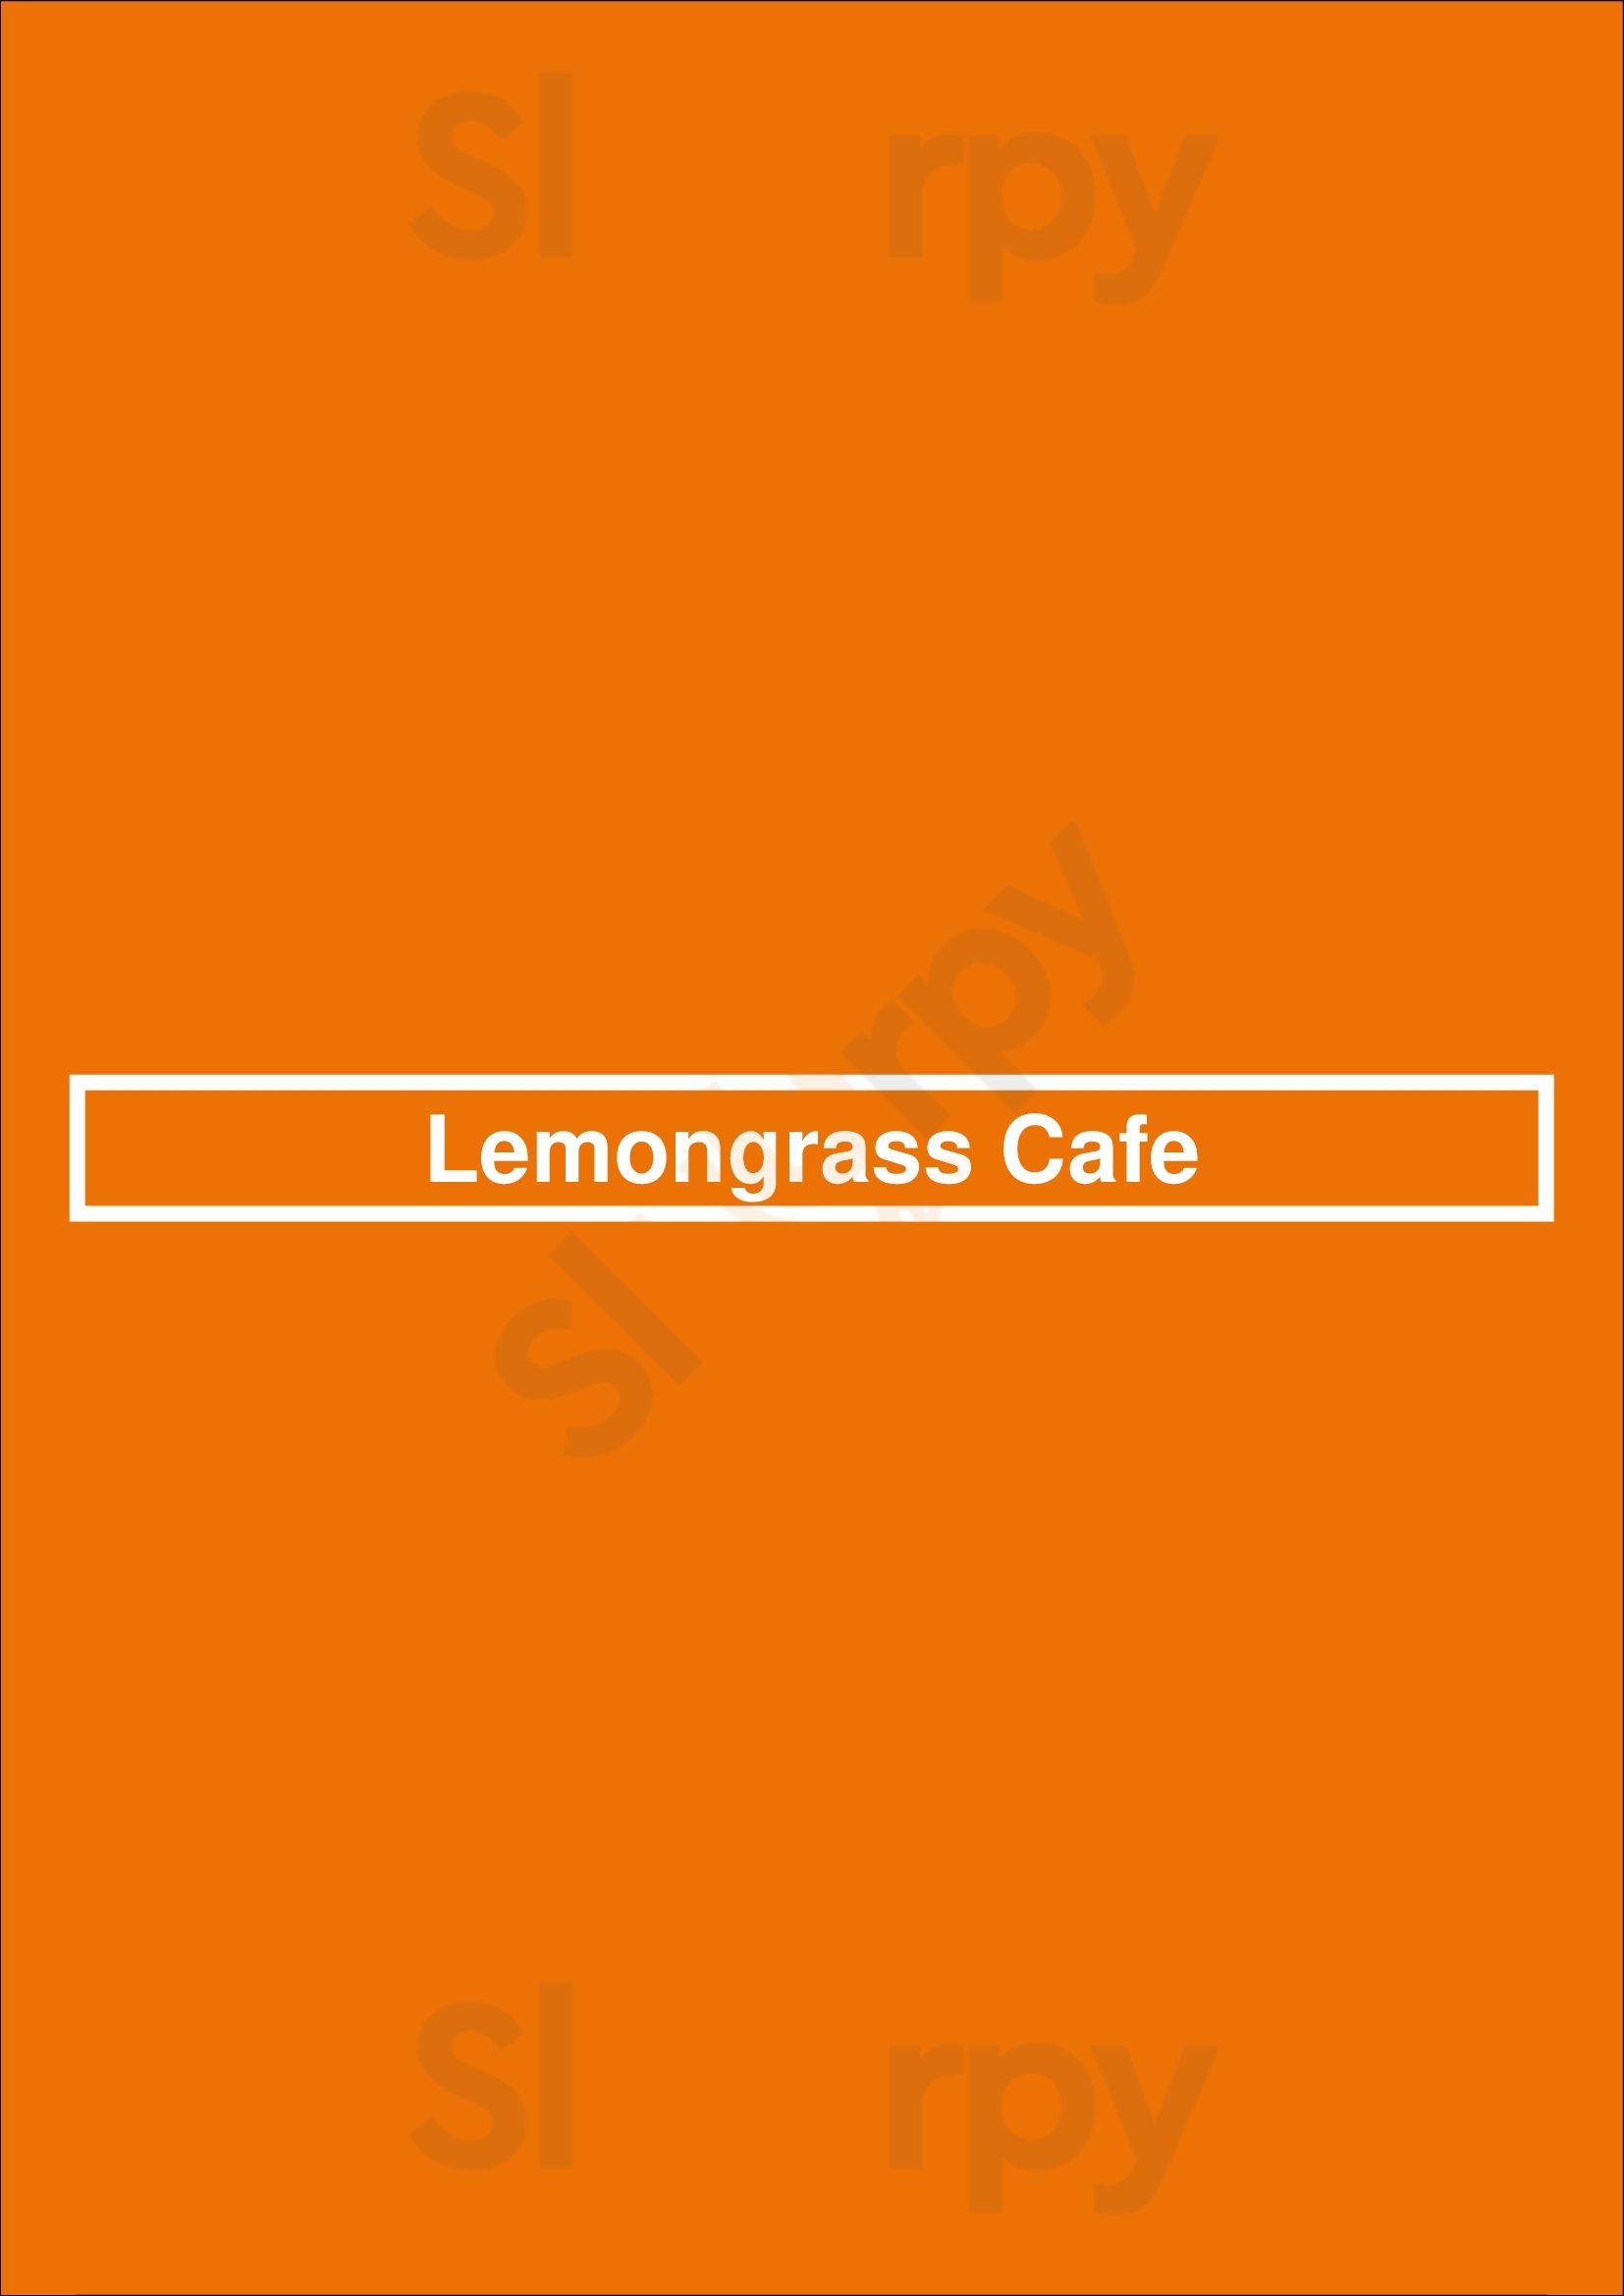 Lemongrass Cafe Edmonton Menu - 1